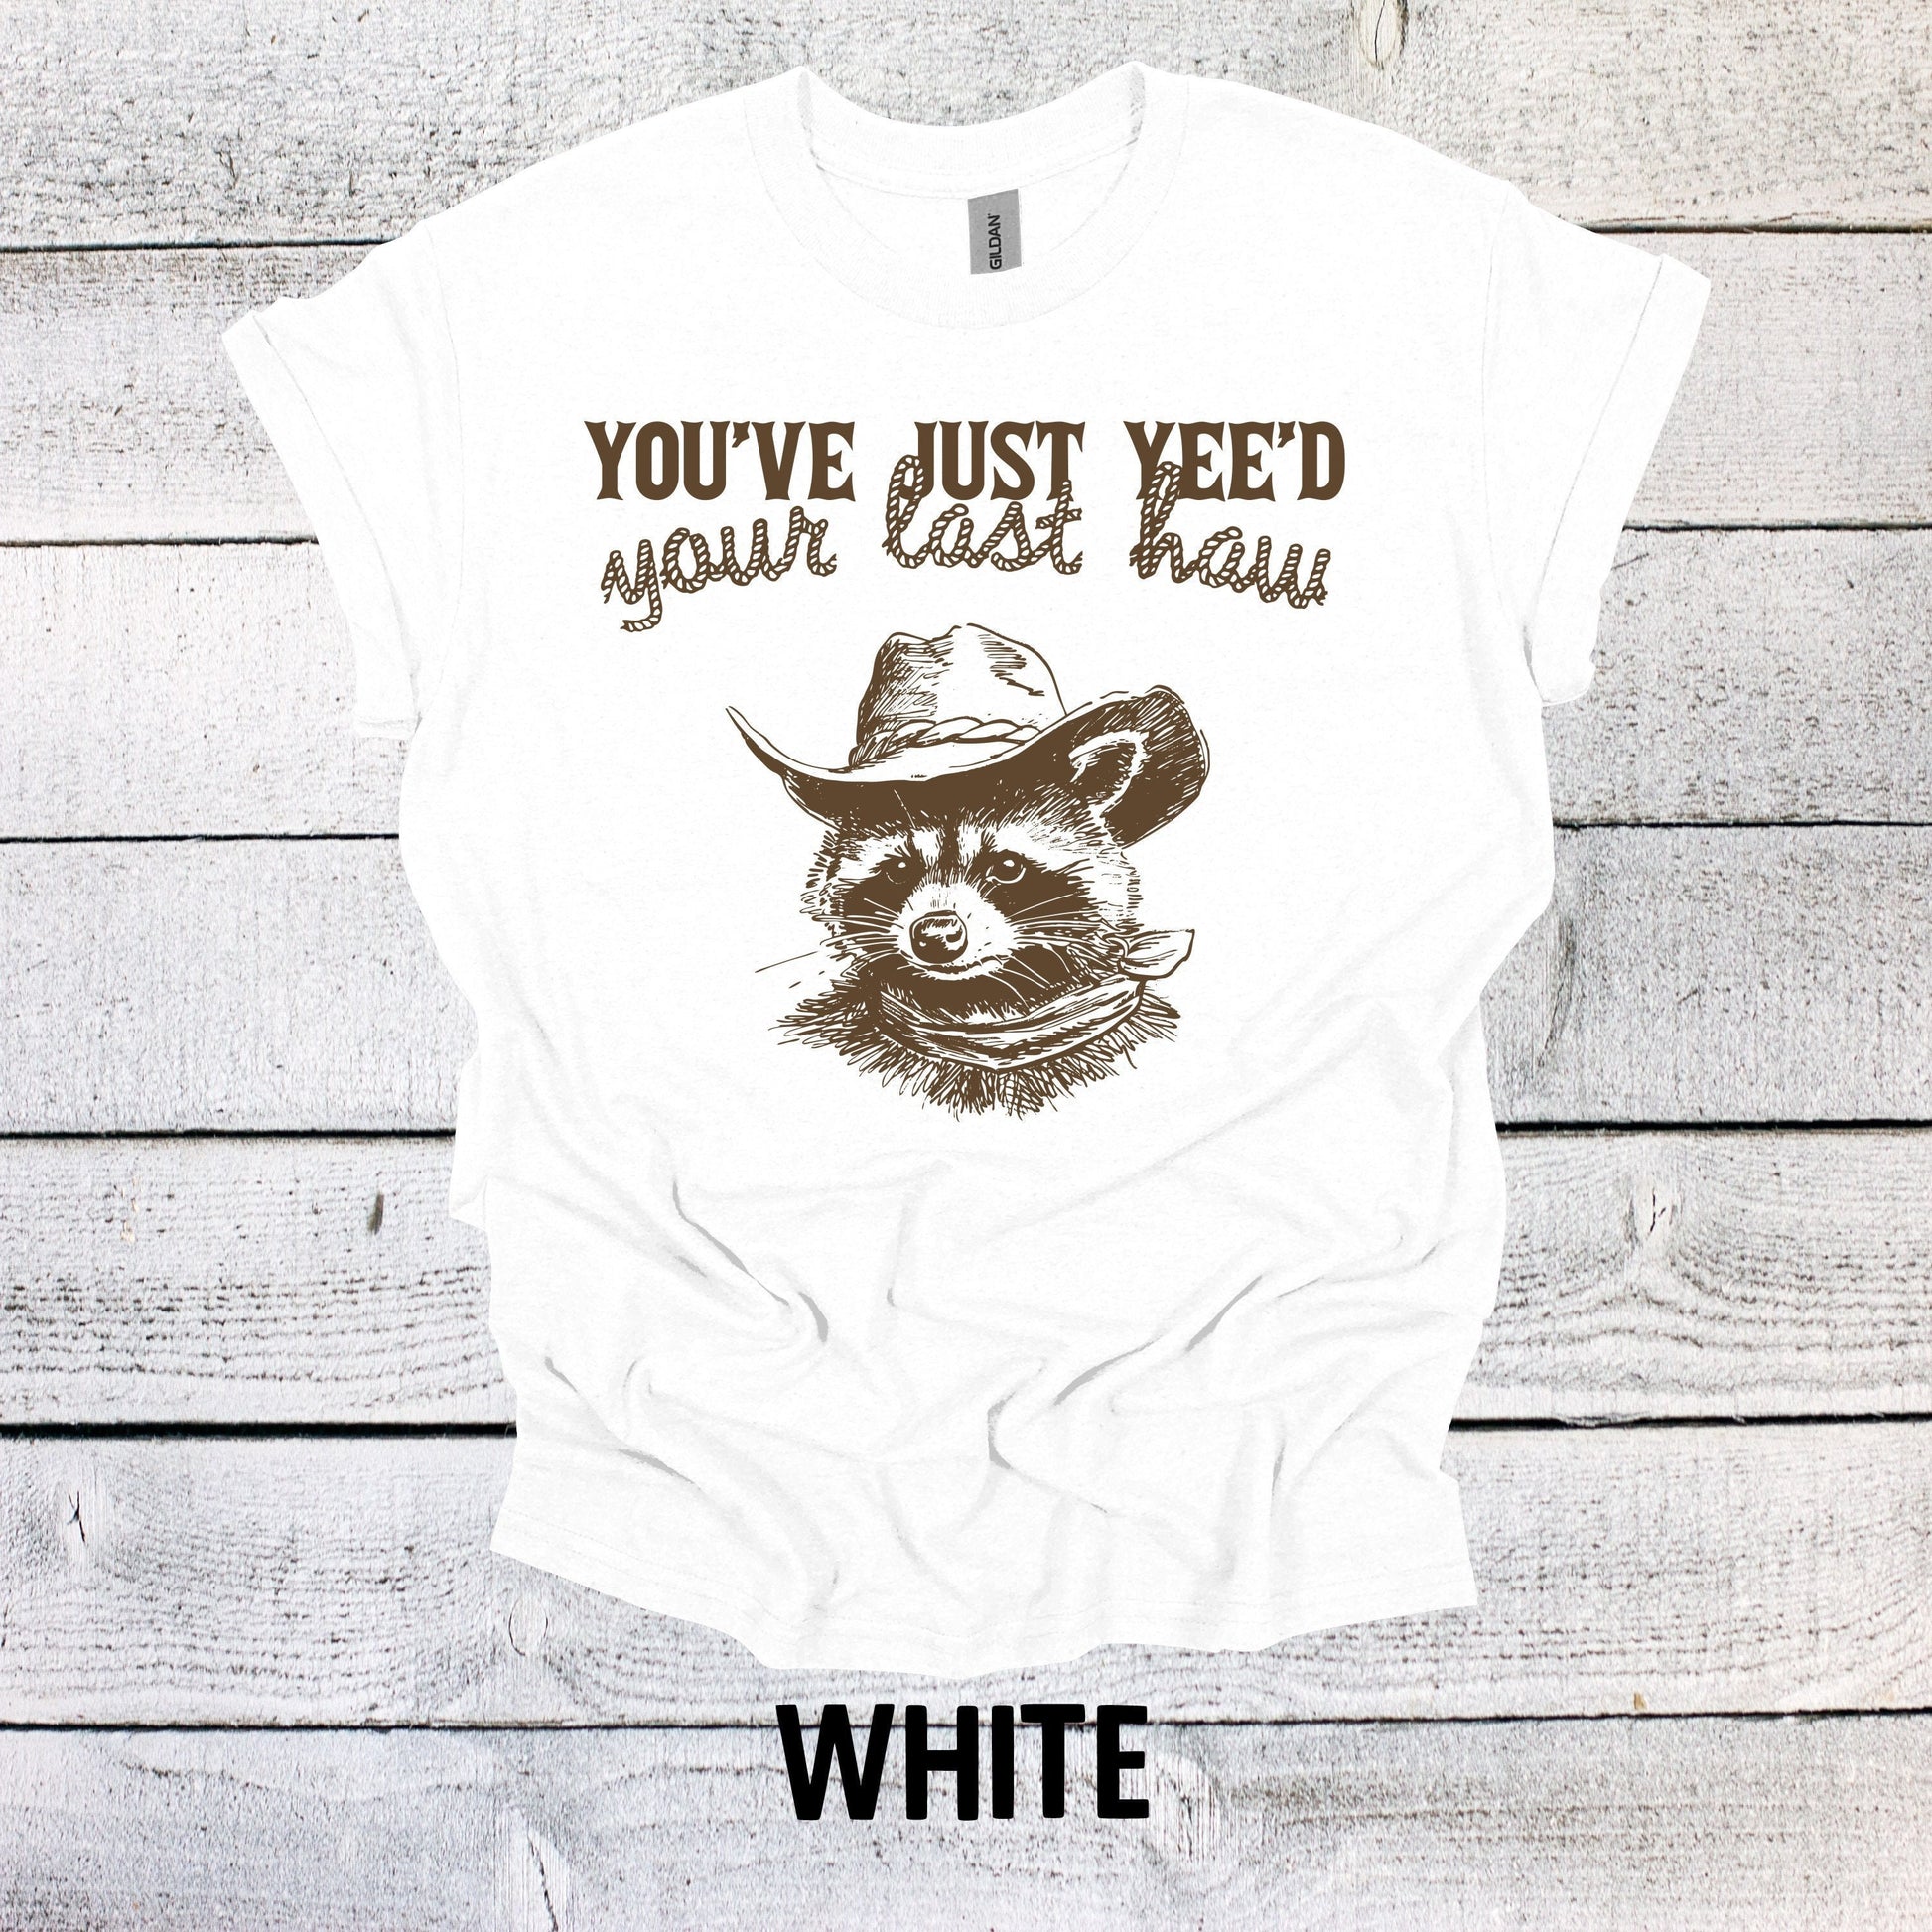 You've Just Yee'd your last haw Raccoon Shirt Graphic Shirt Adult Vintage Funny Shirt Nostalgia Cotton Shirt Minimalist Shirt